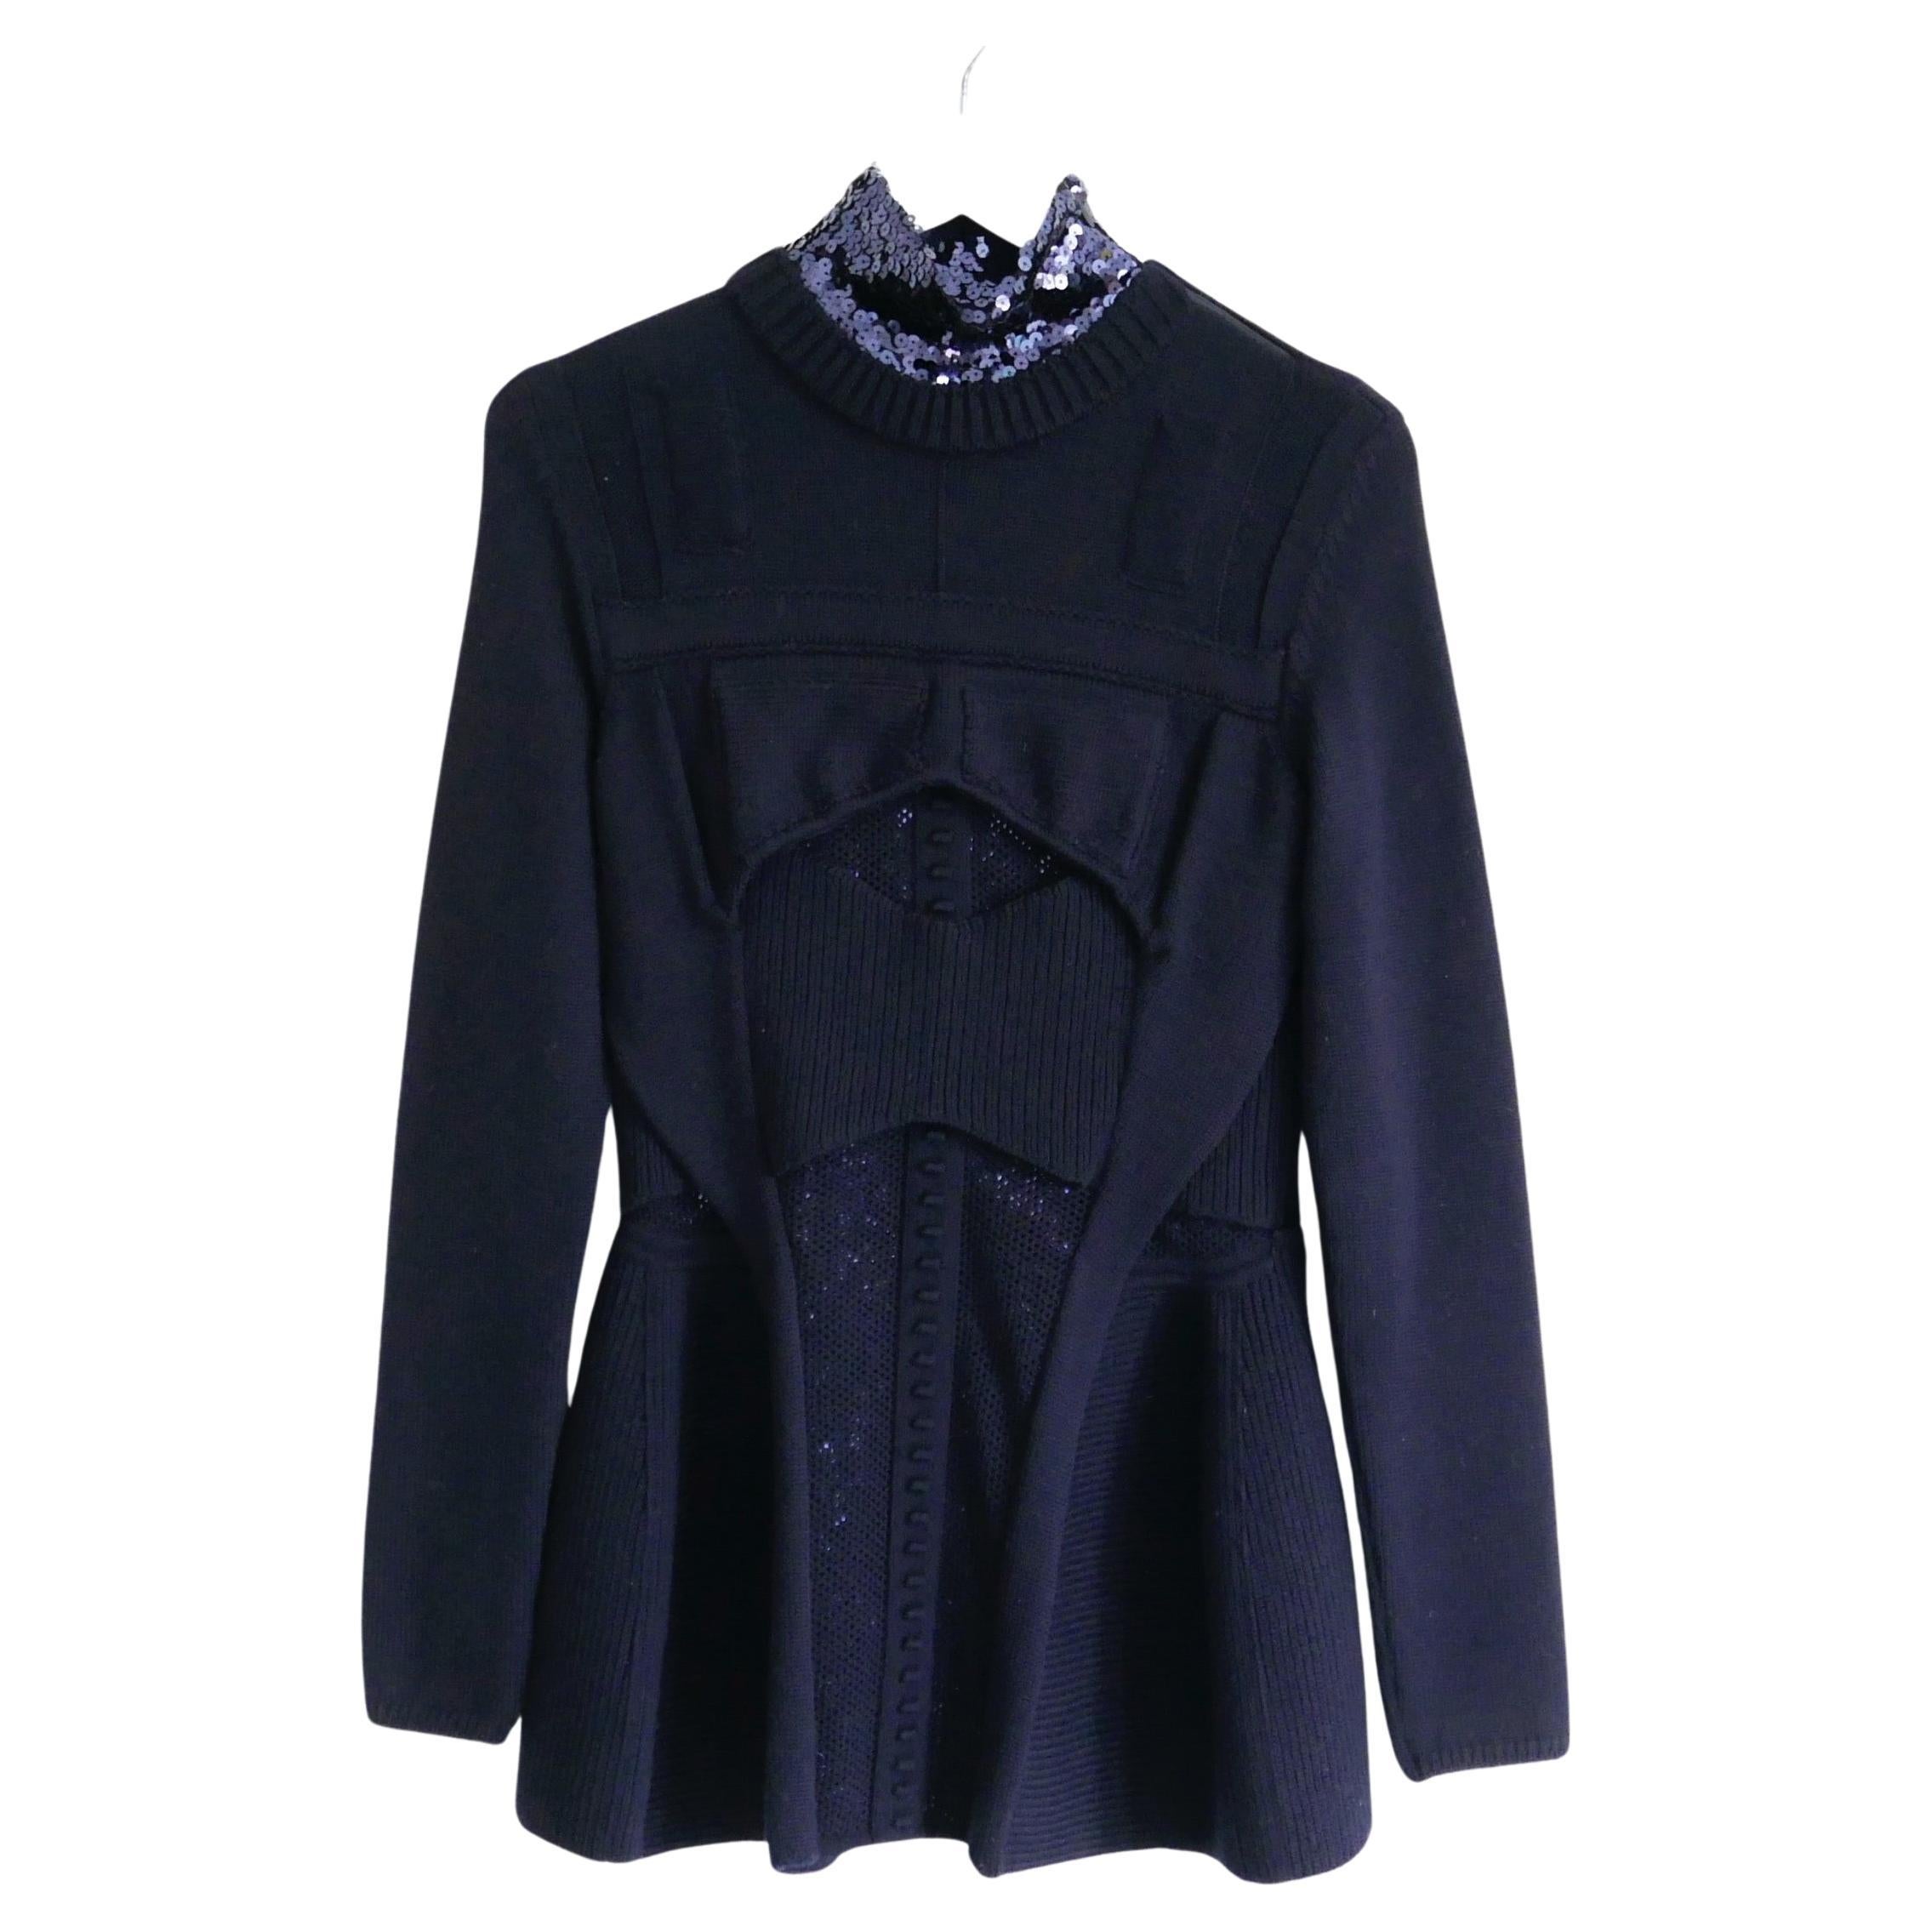 Dior x Raf Simons Pre-Fall 15 Sequin Knit Peplum Top For Sale